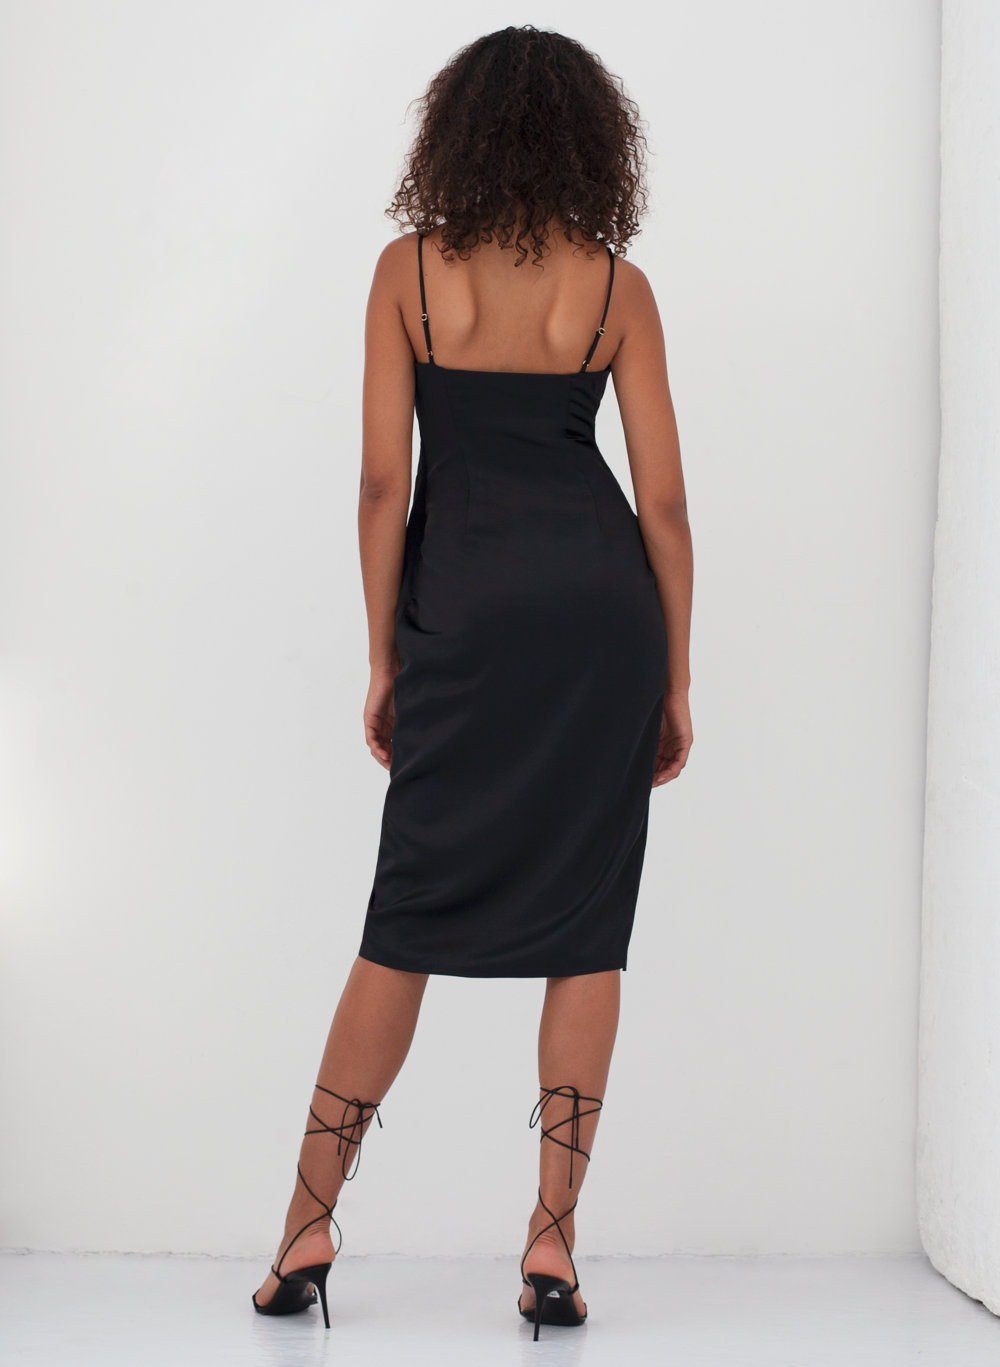 black thigh slit dress